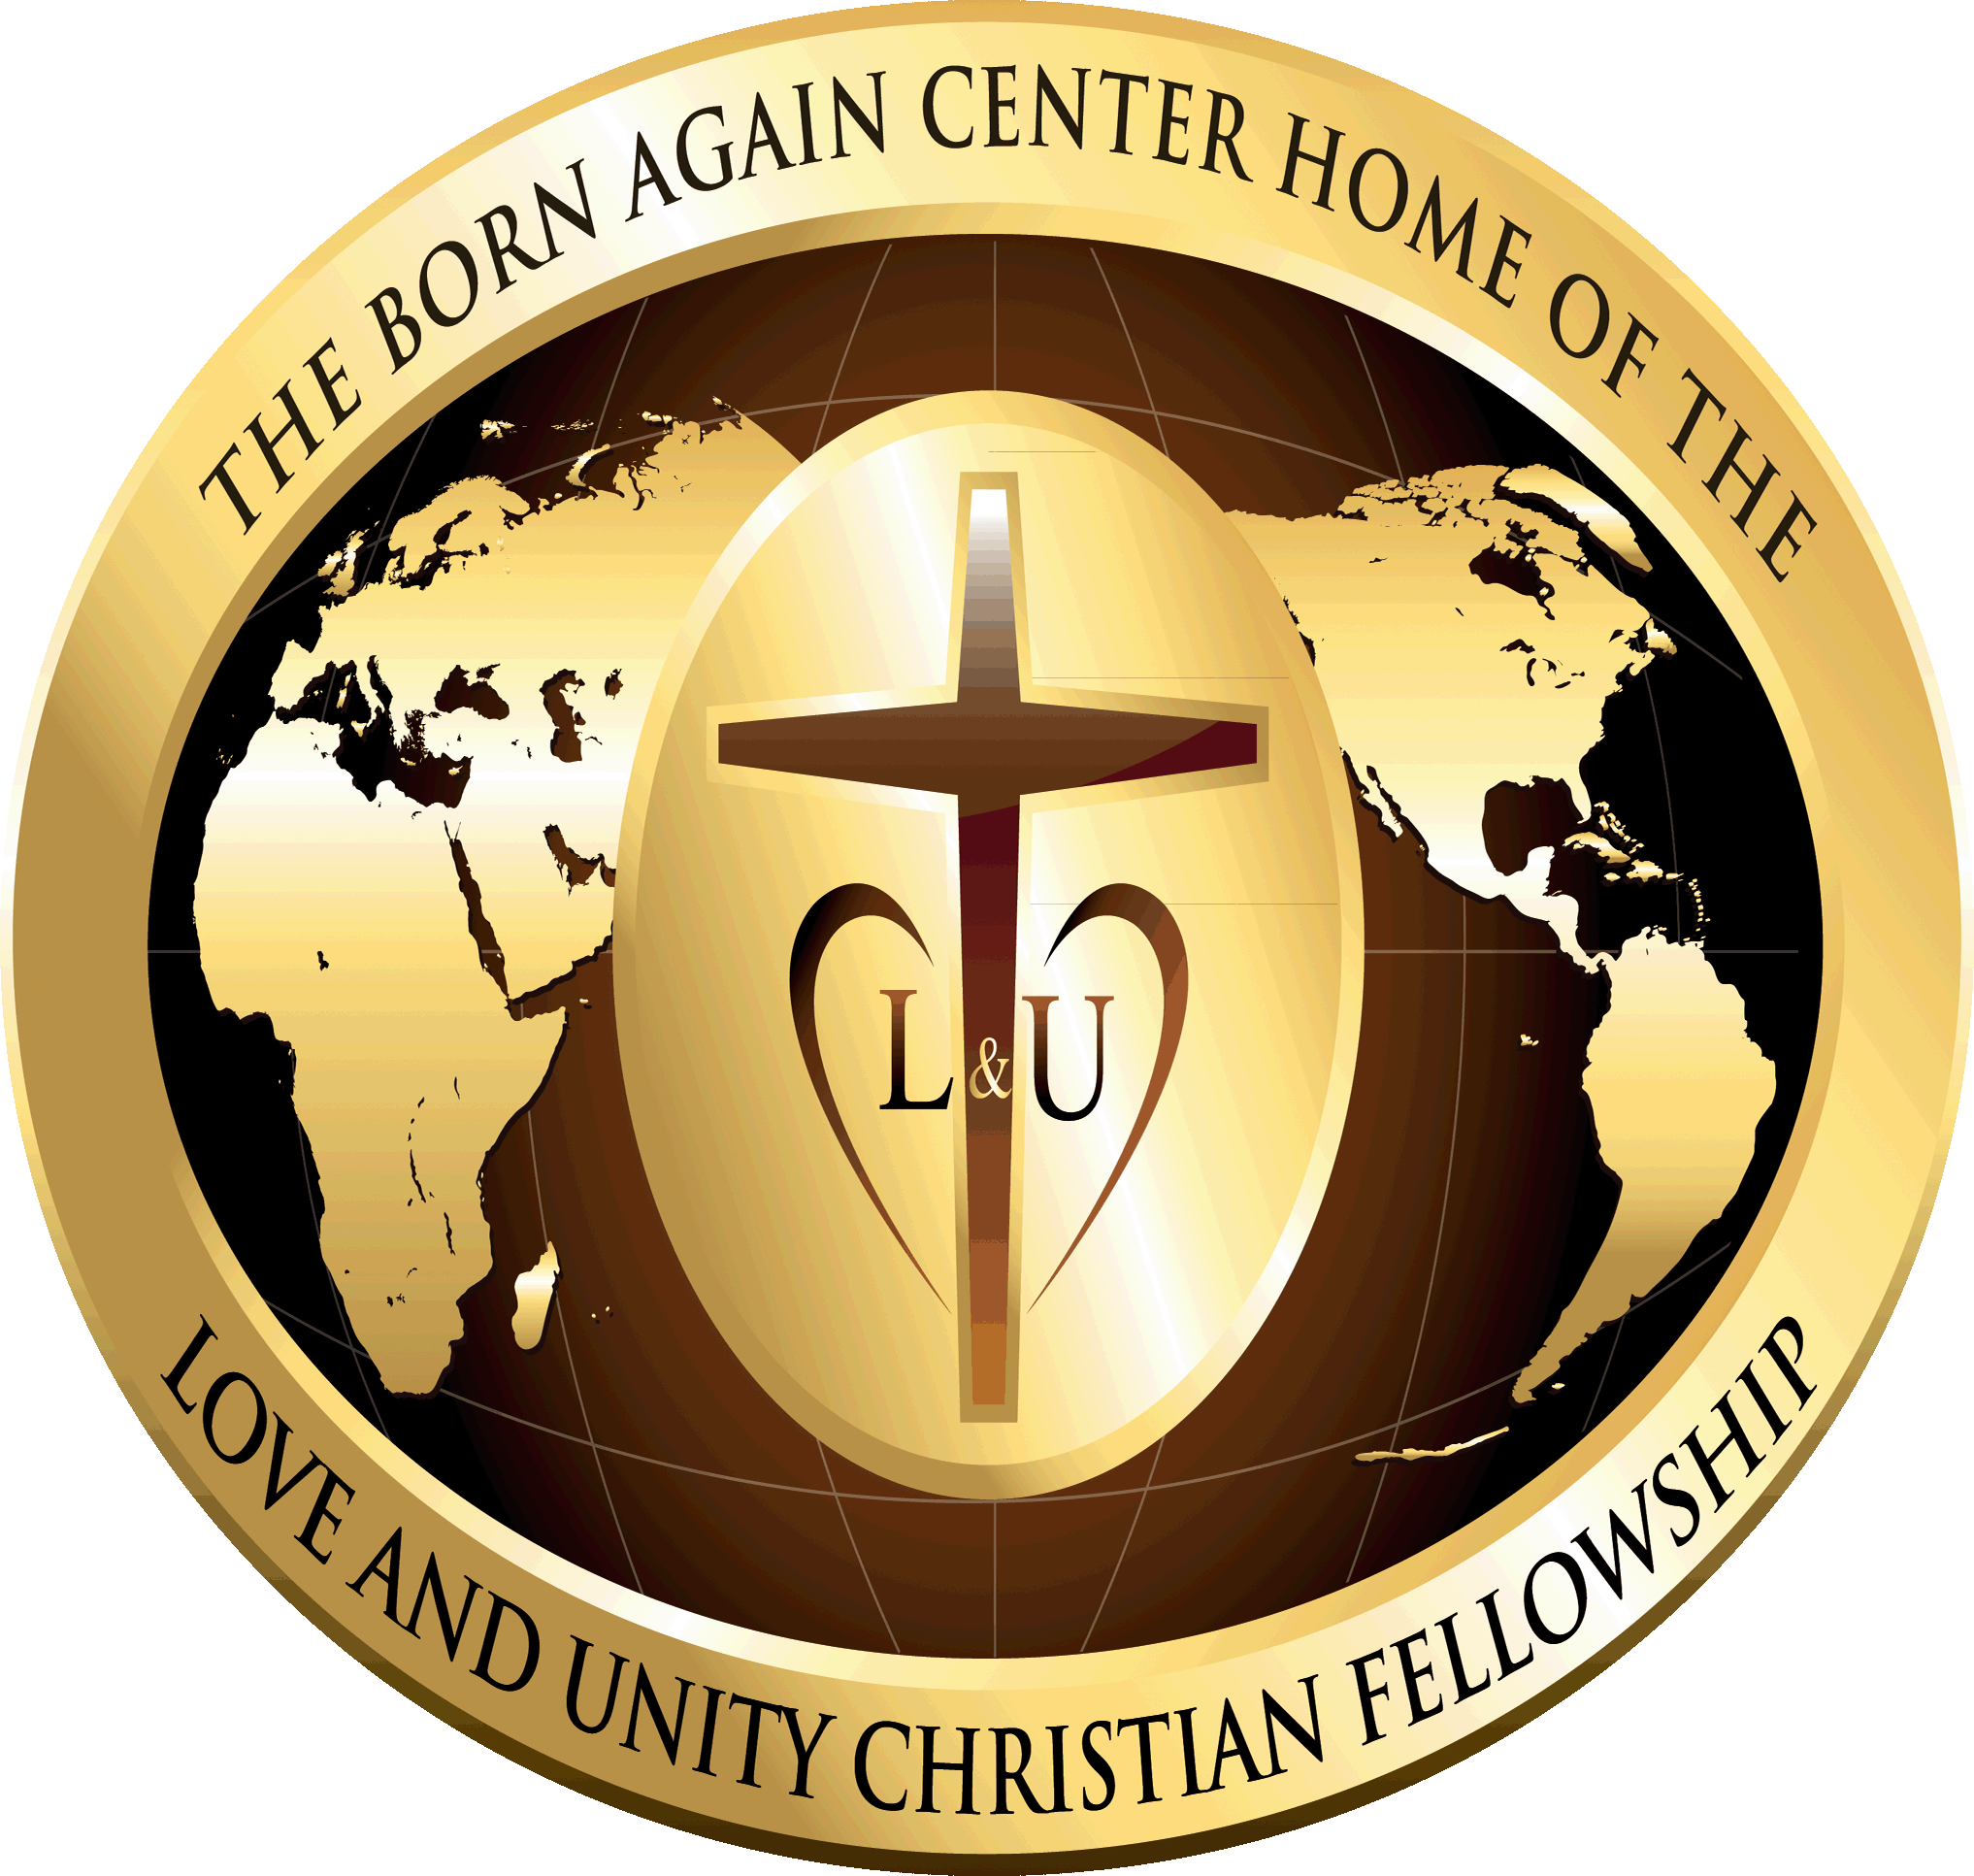 Love and Unity Christian Fellowship